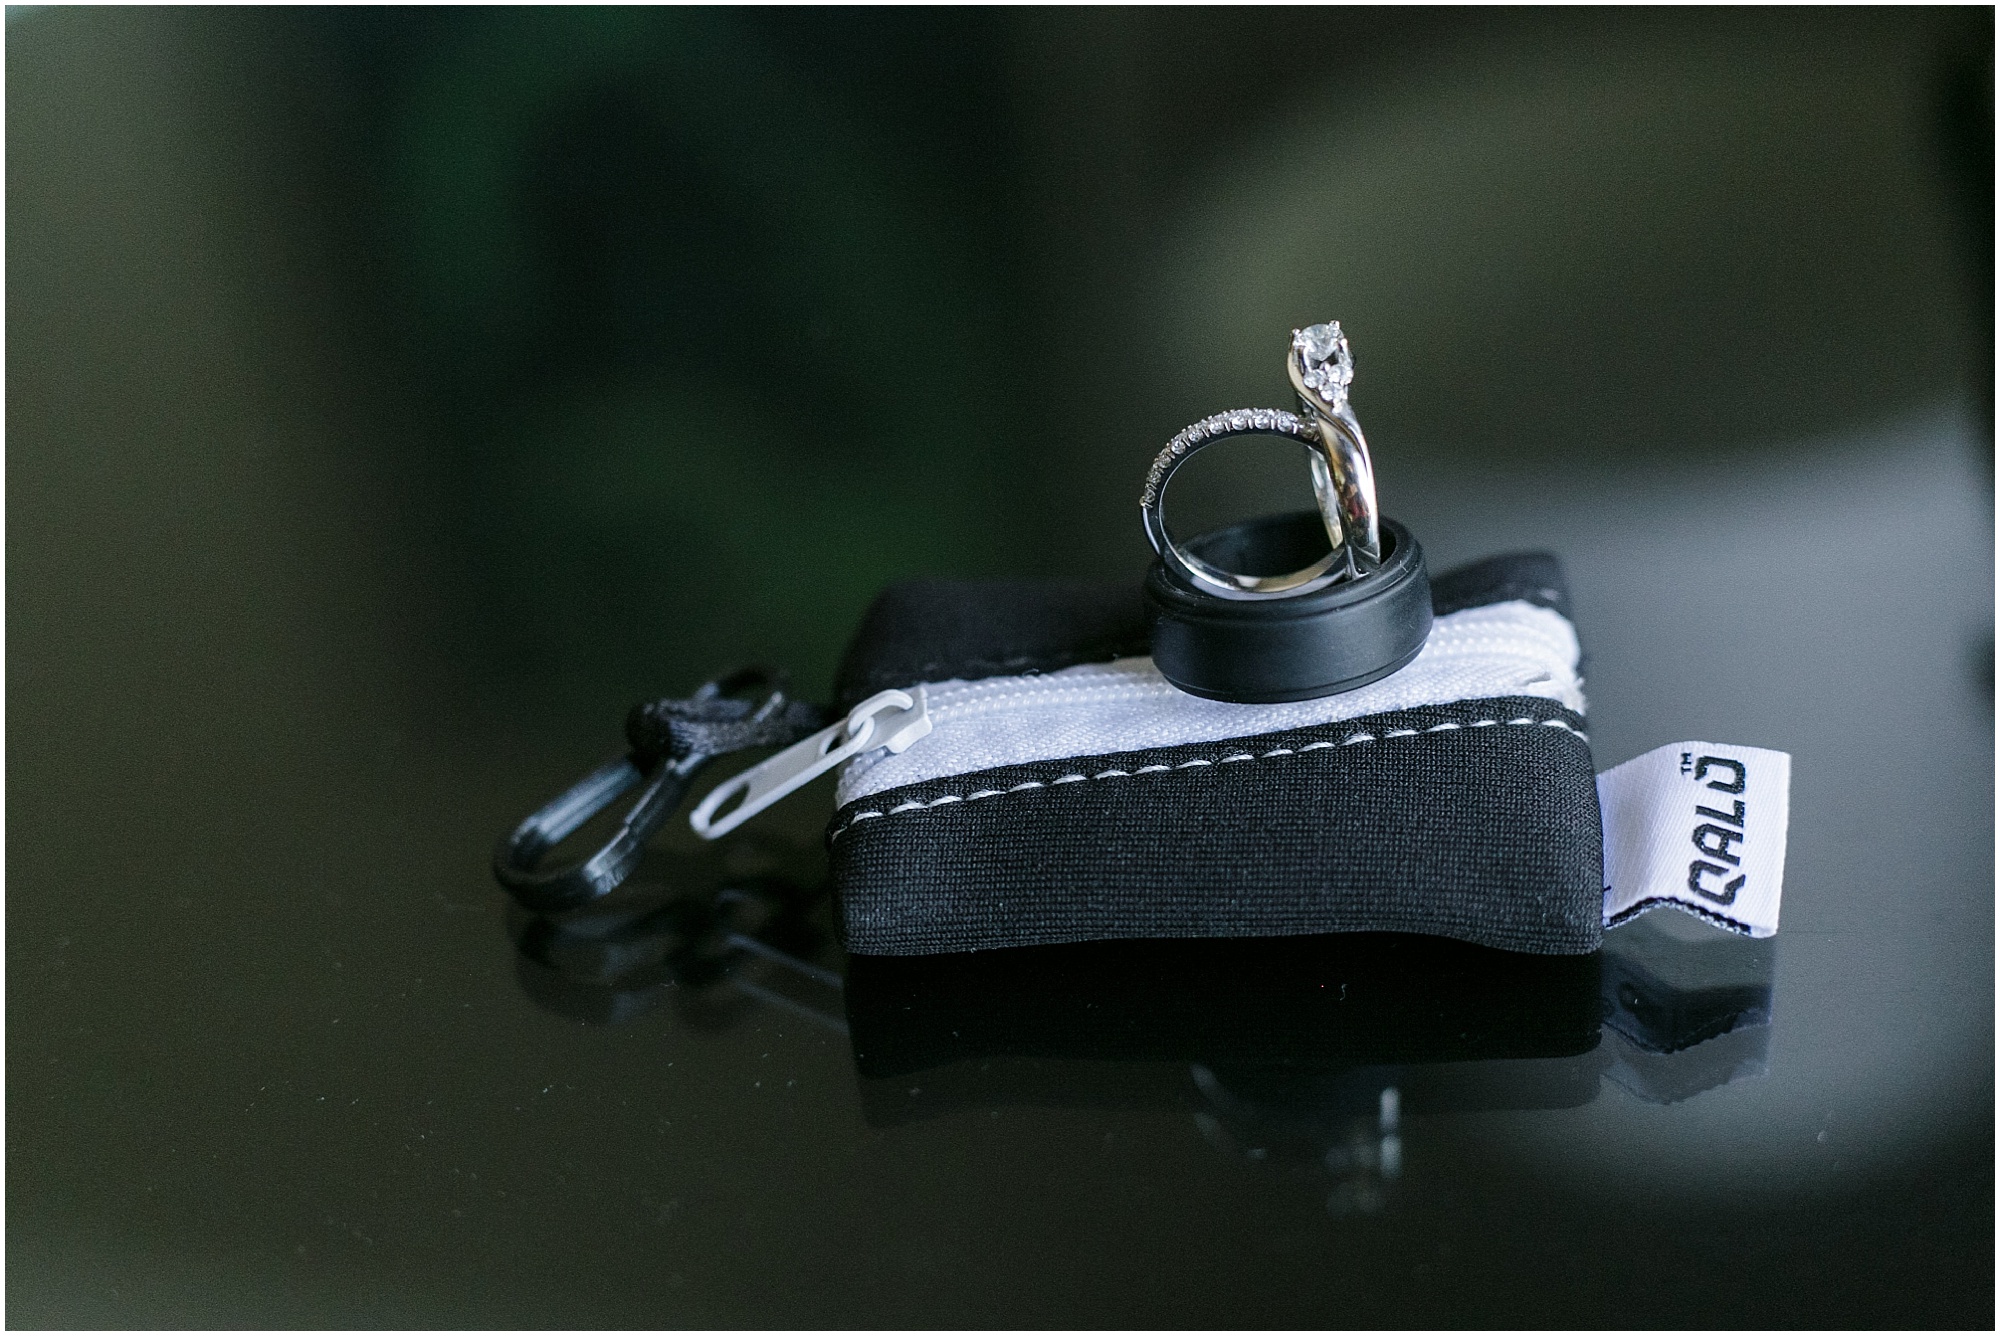 Wedding rings on a tuxedo ring purse.